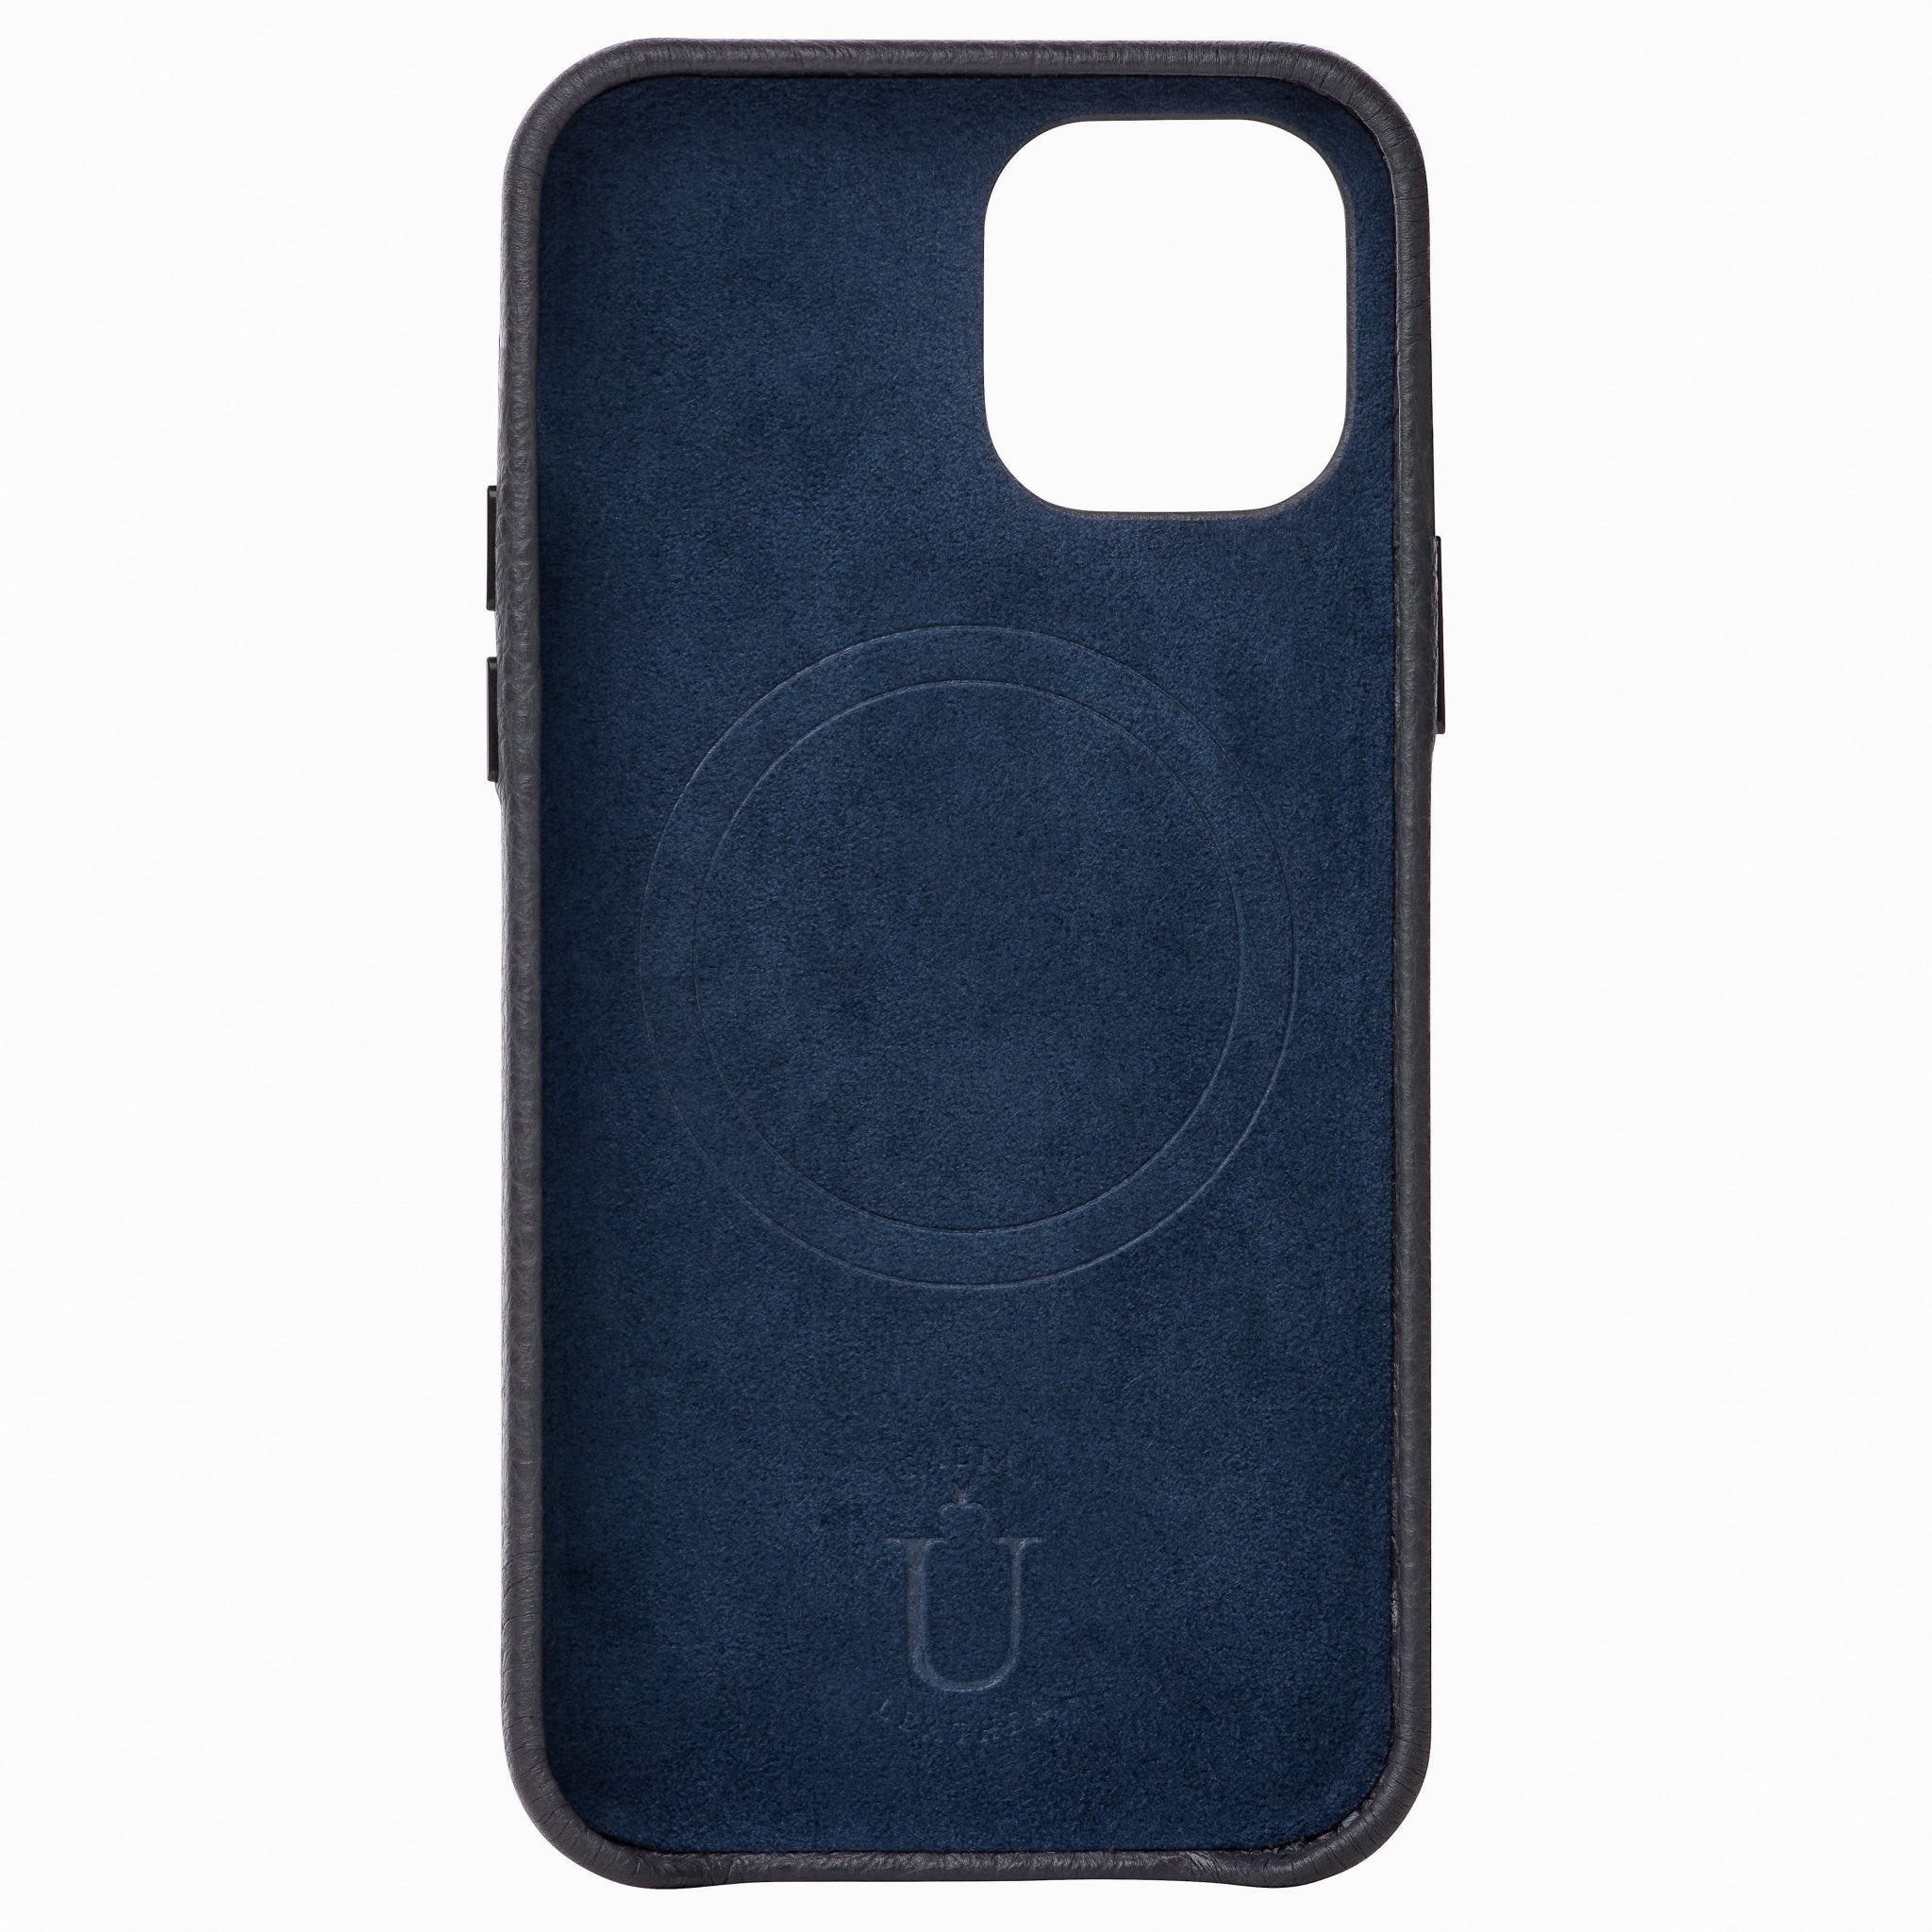 Ubique Italy Luxury iPhone Case 13 Pebble Grain Leather Storm Grey Inner Lining